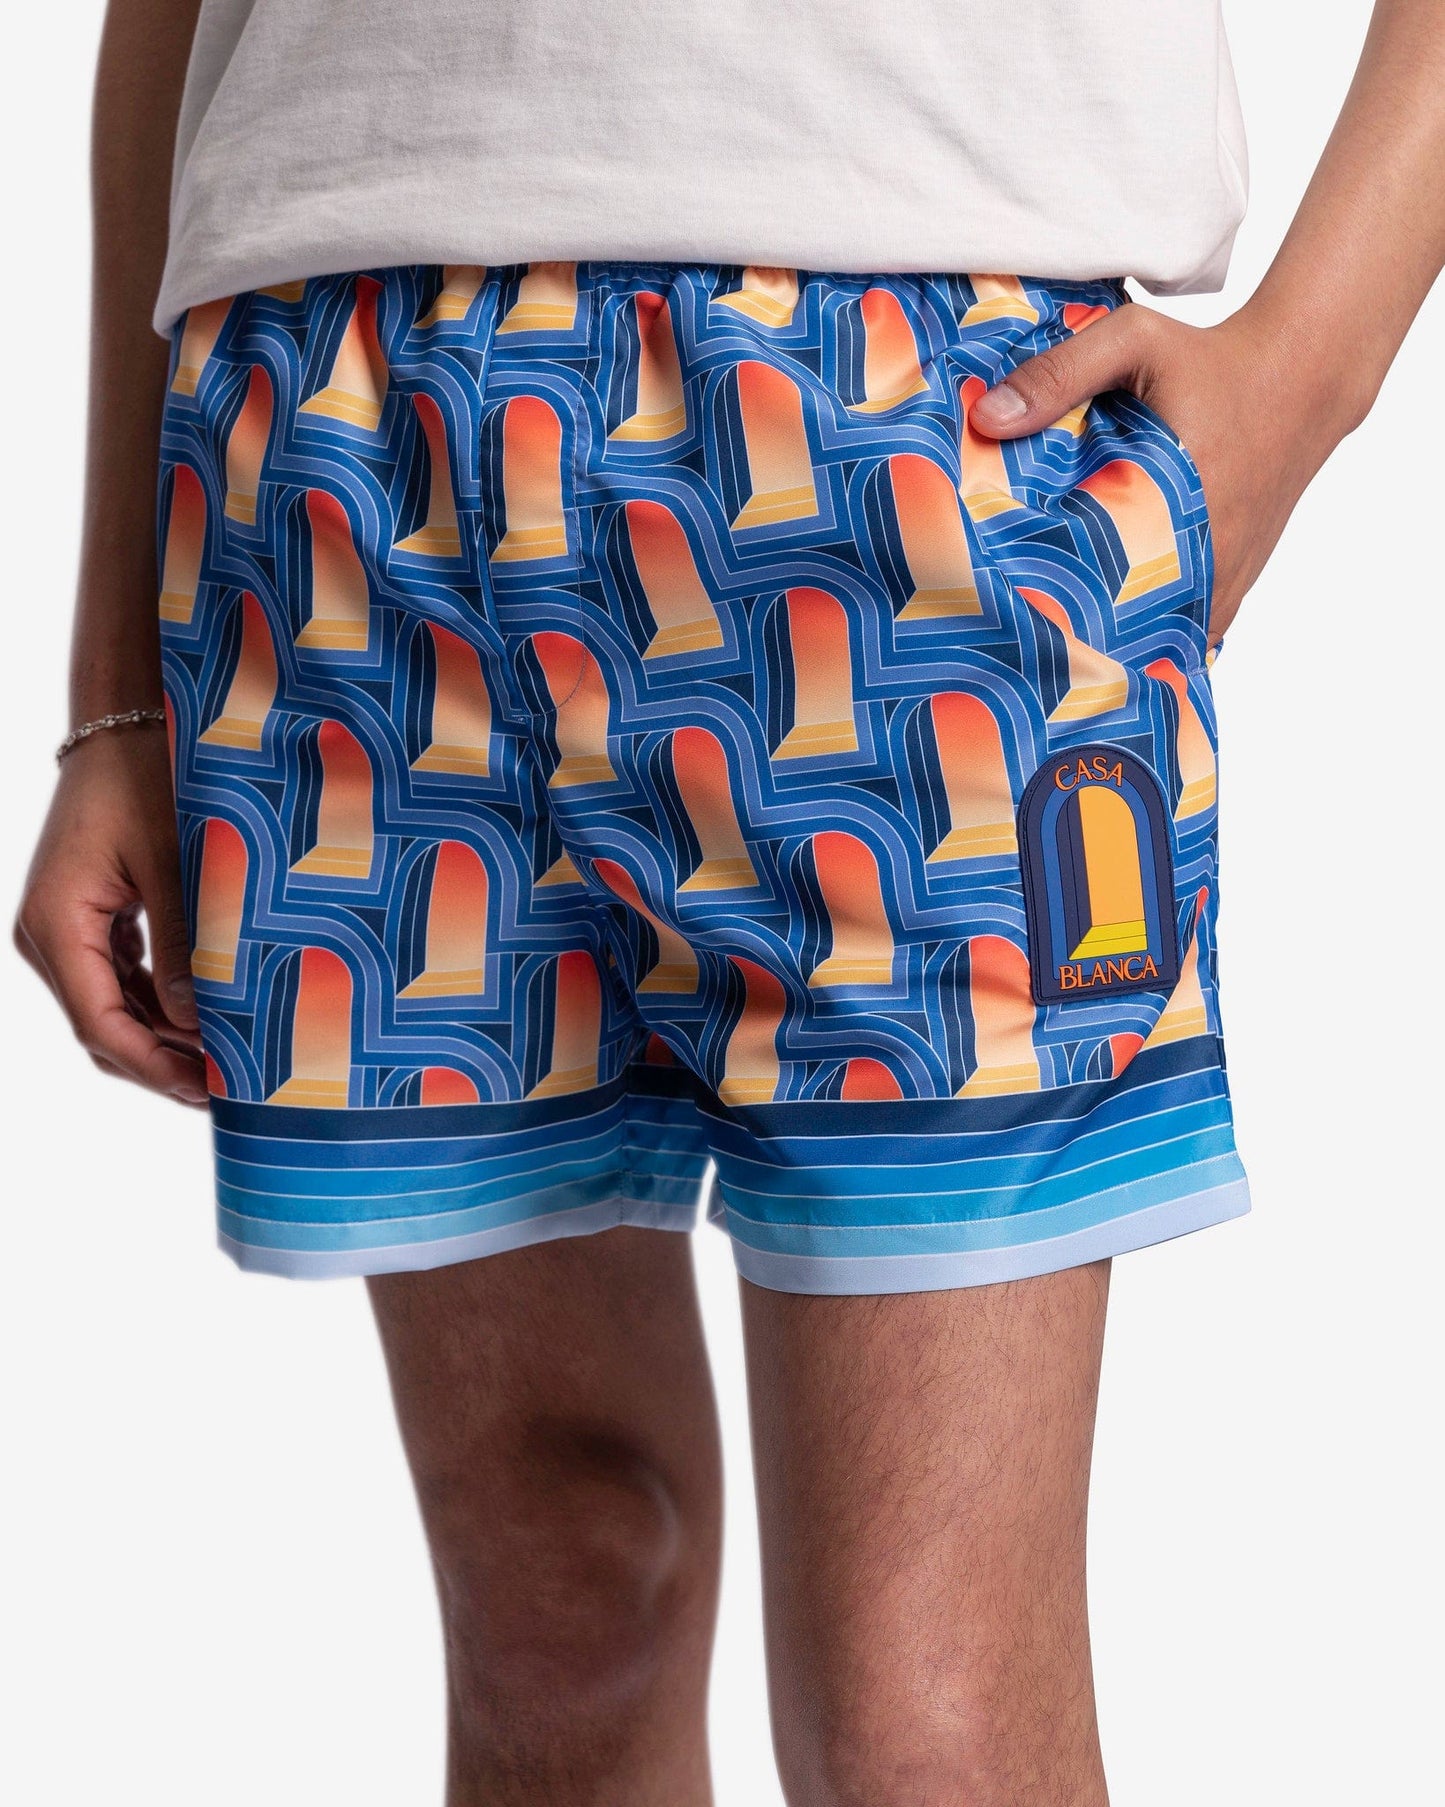 Casablanca Men's Shorts Arche de Nuit Printed Swim Trunks in Multi